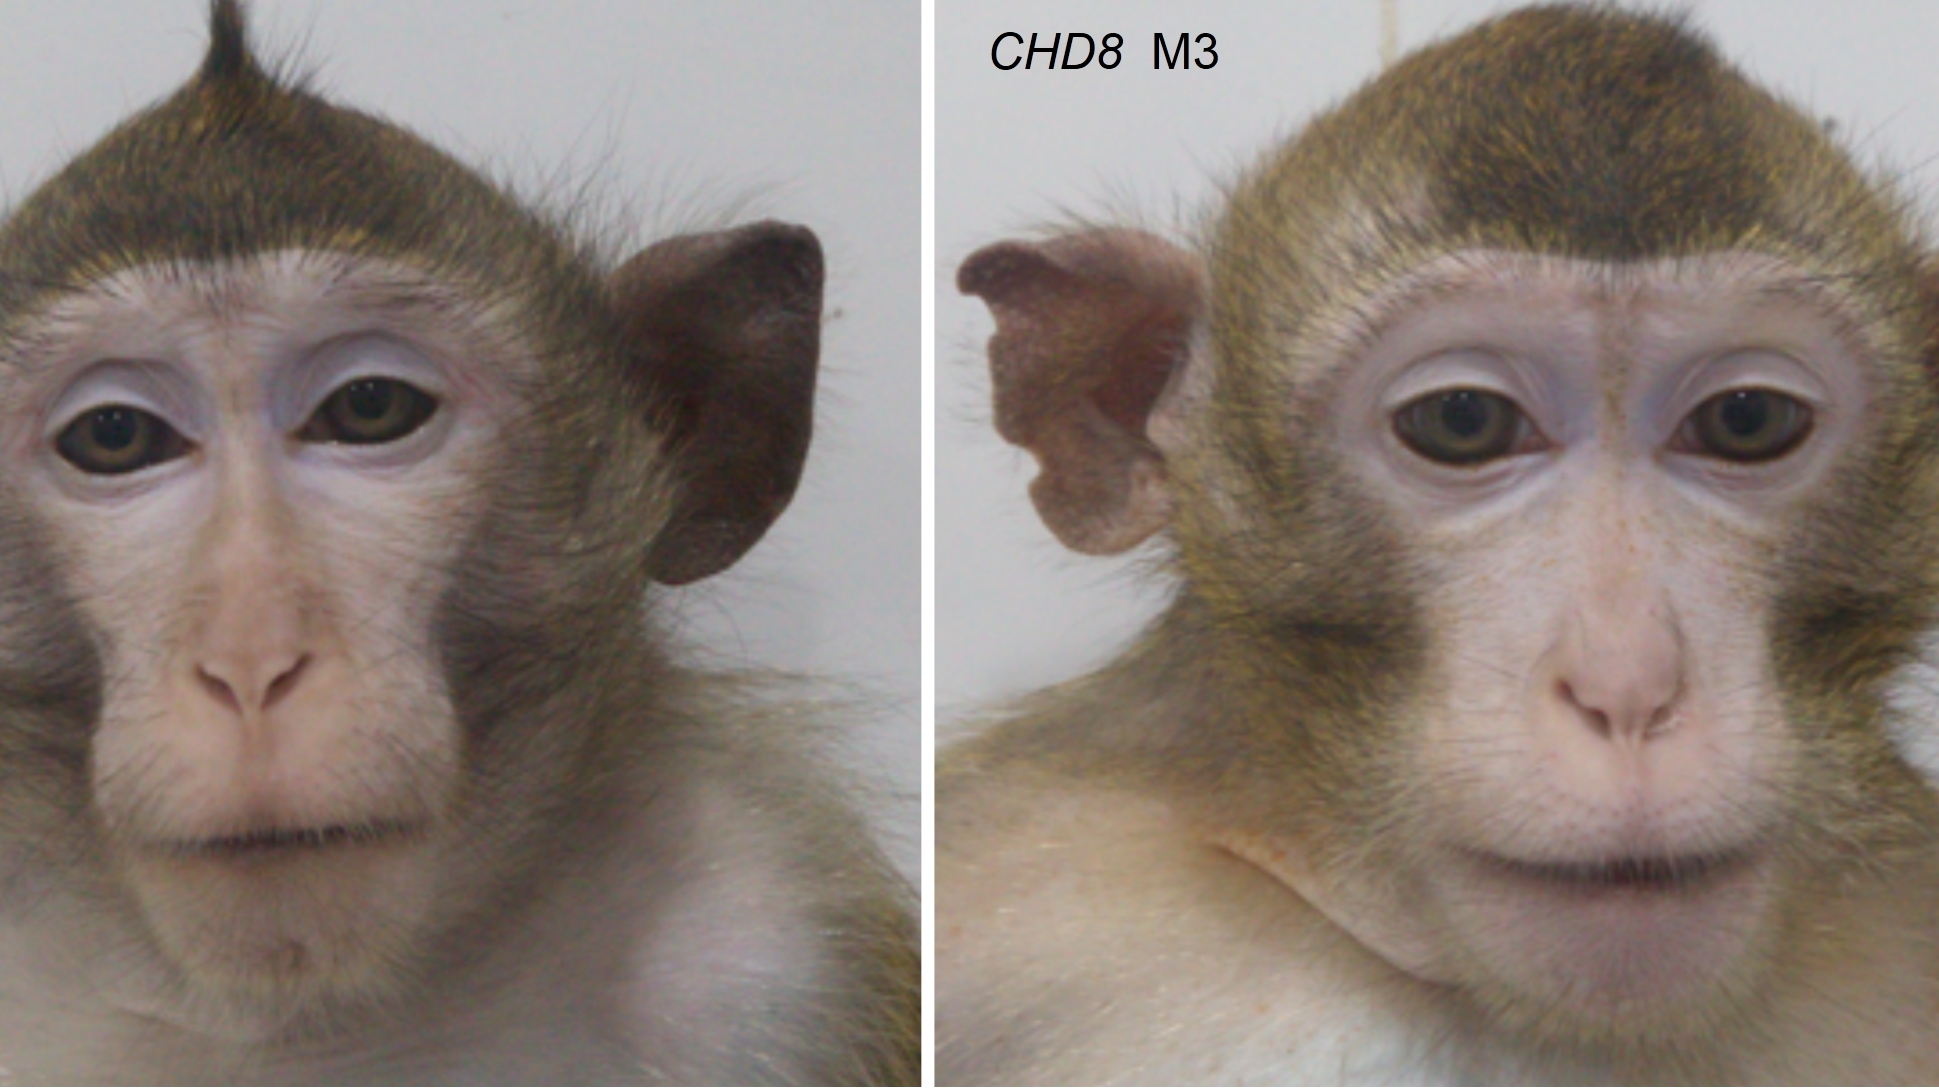 Macrocephaly in CHD8 mutant monkey M3